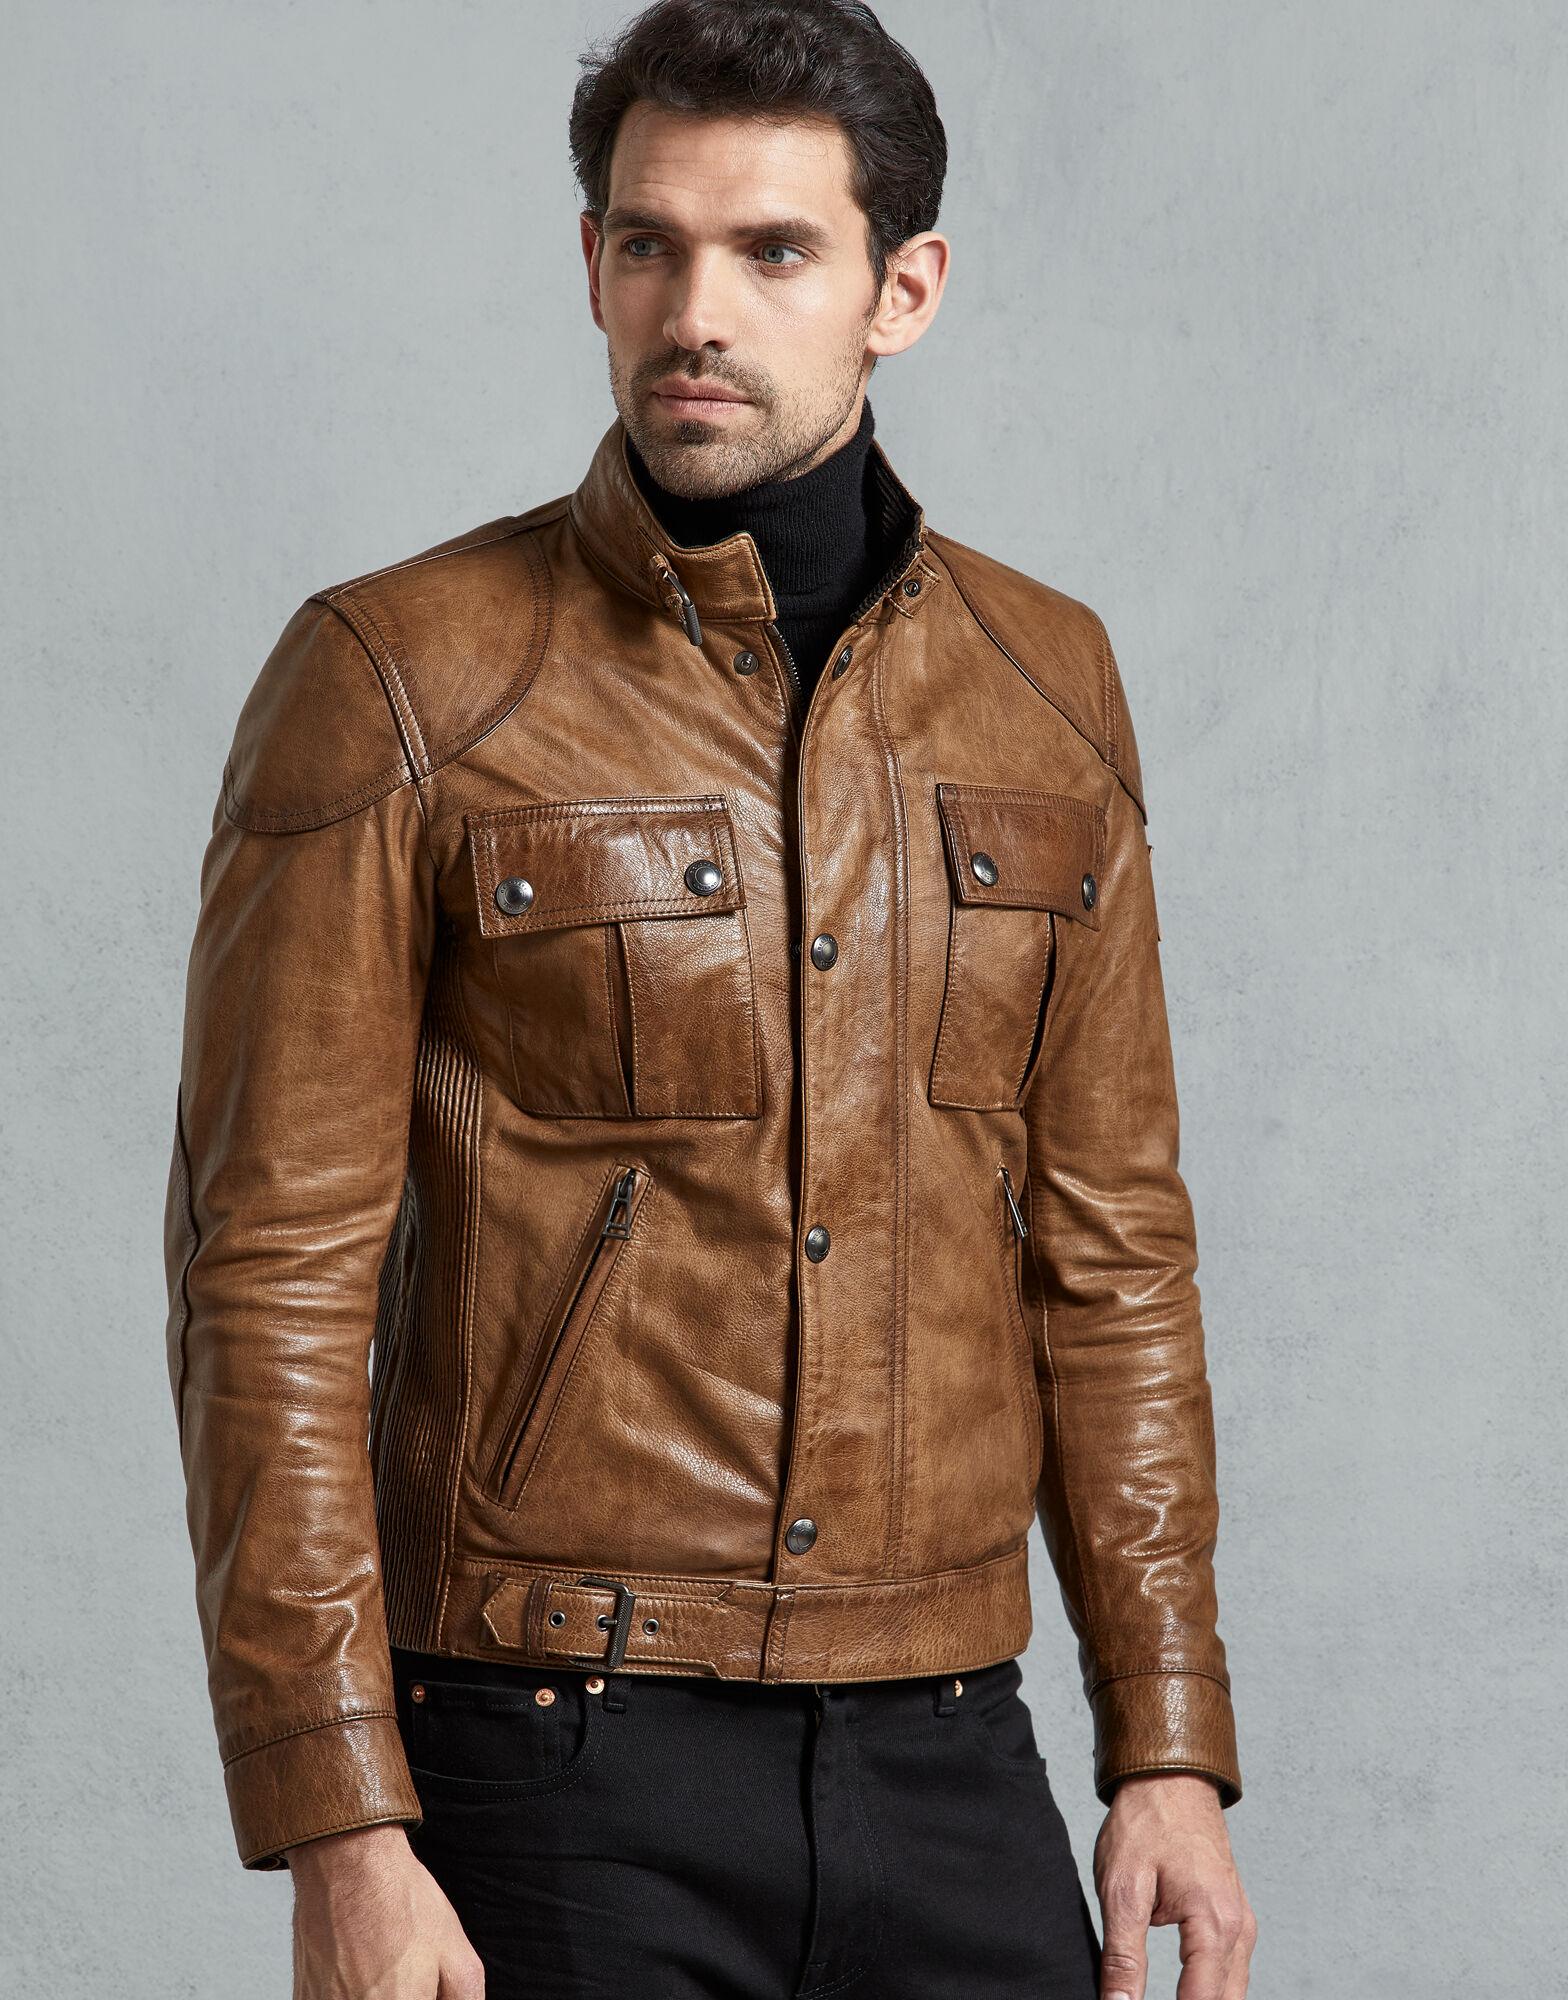 Belstaff Gangster Leather Jacket in Tan (Brown) for Men - Lyst